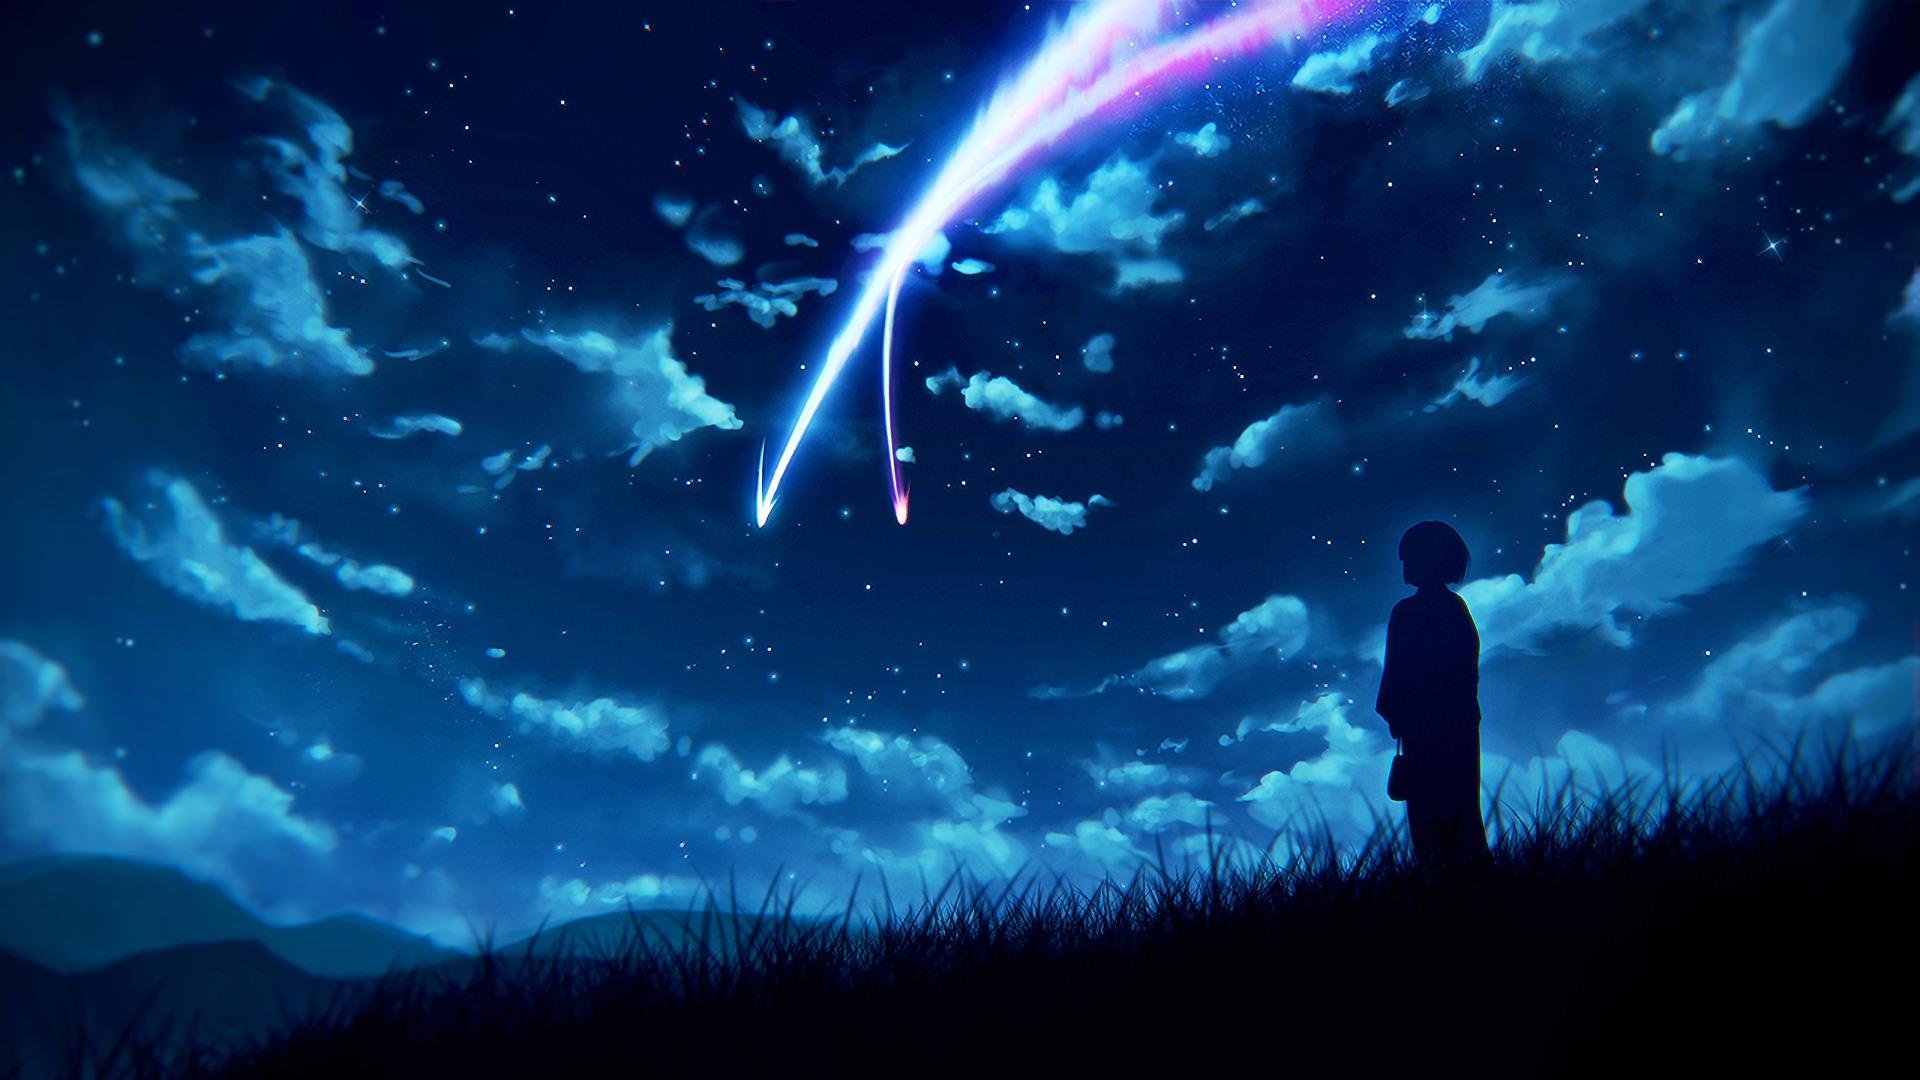 Anime Night Sky Background Wallpaper 106114